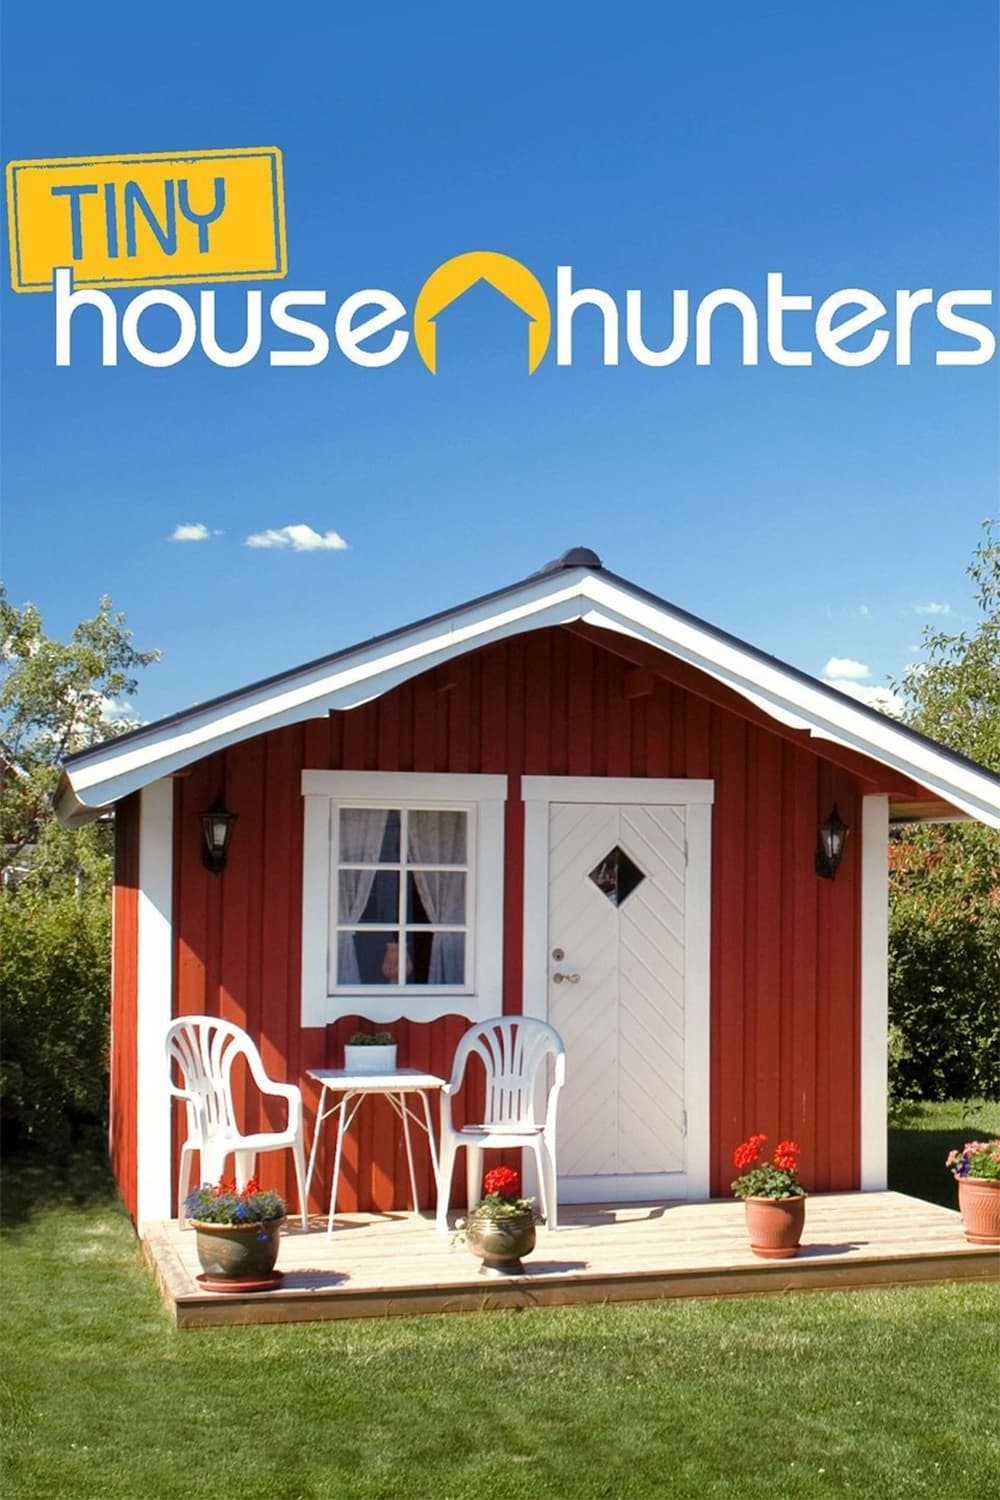 Mini-maison : House Hunters